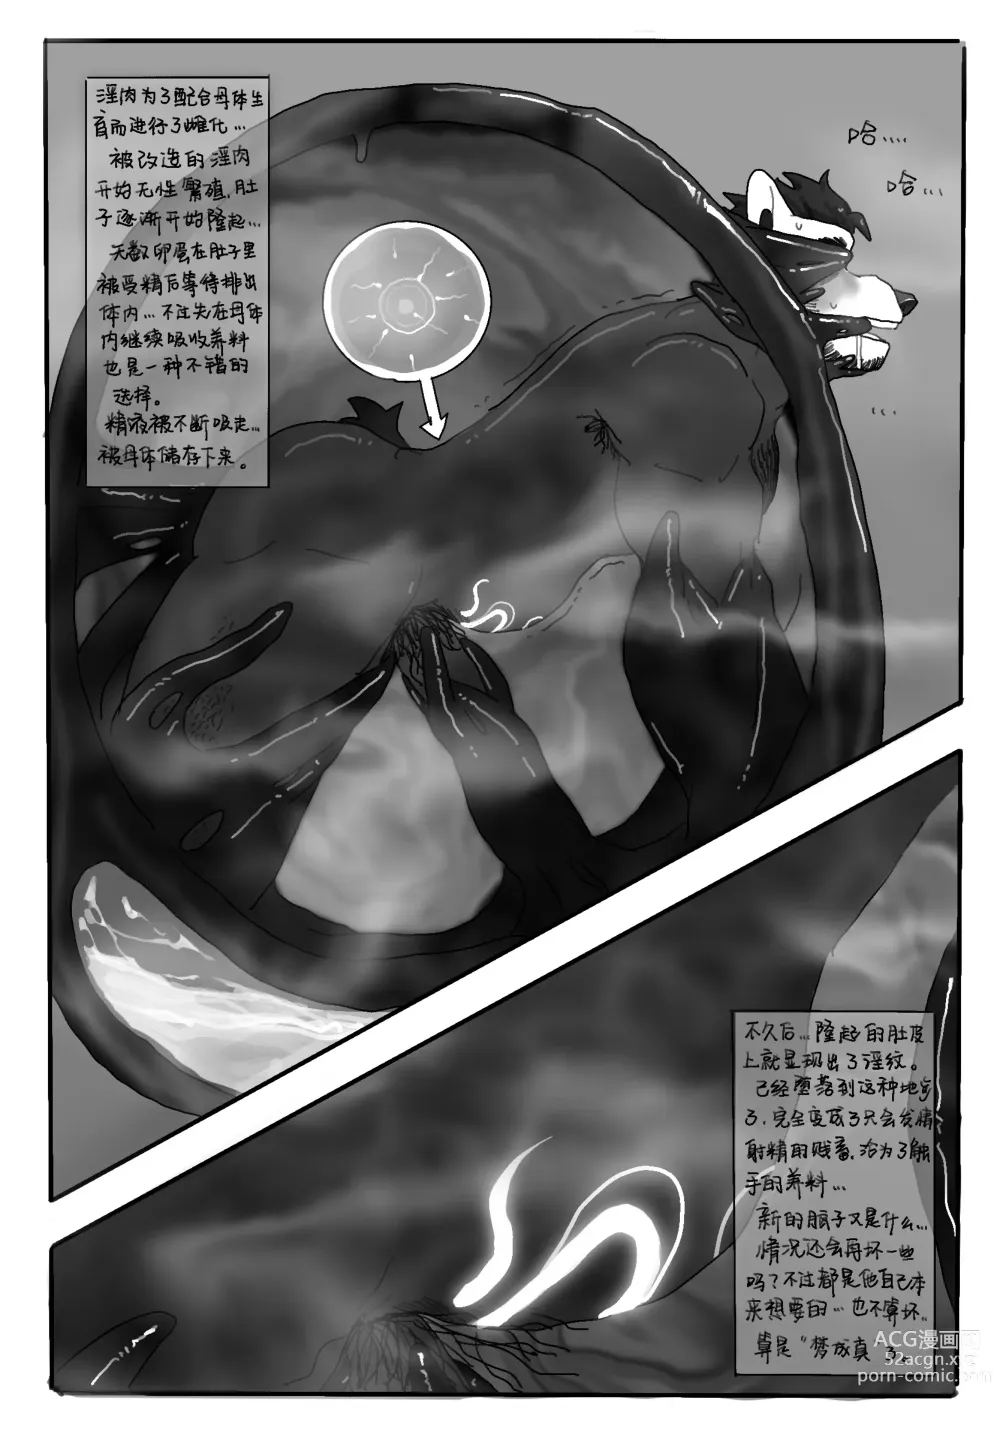 Page 22 of doujinshi No Title